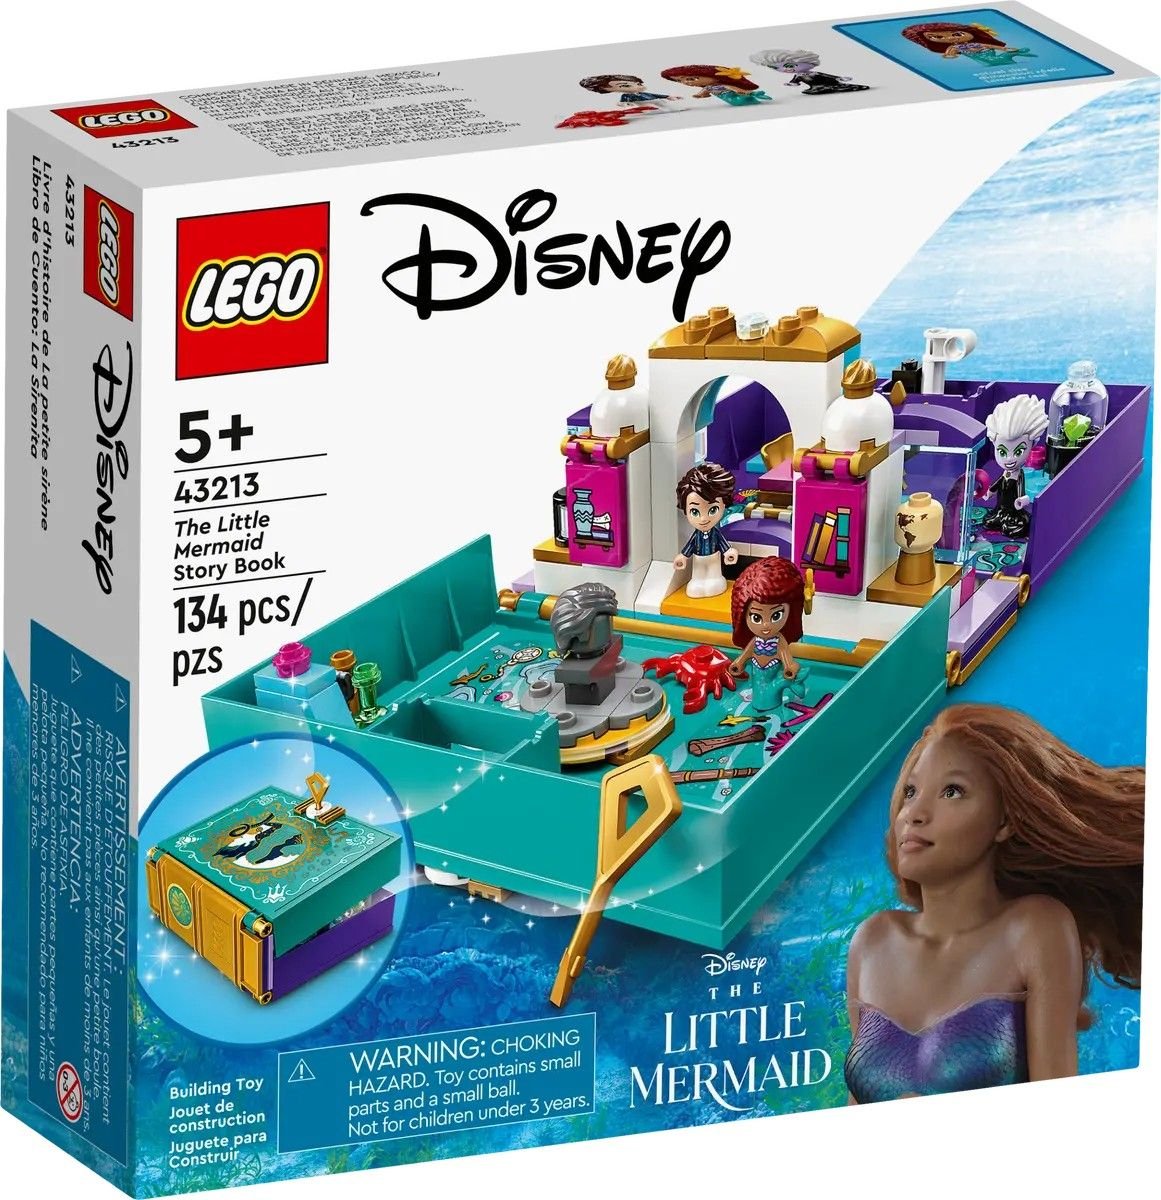 The Little Mermaid Story Book LEGO Disney 43213